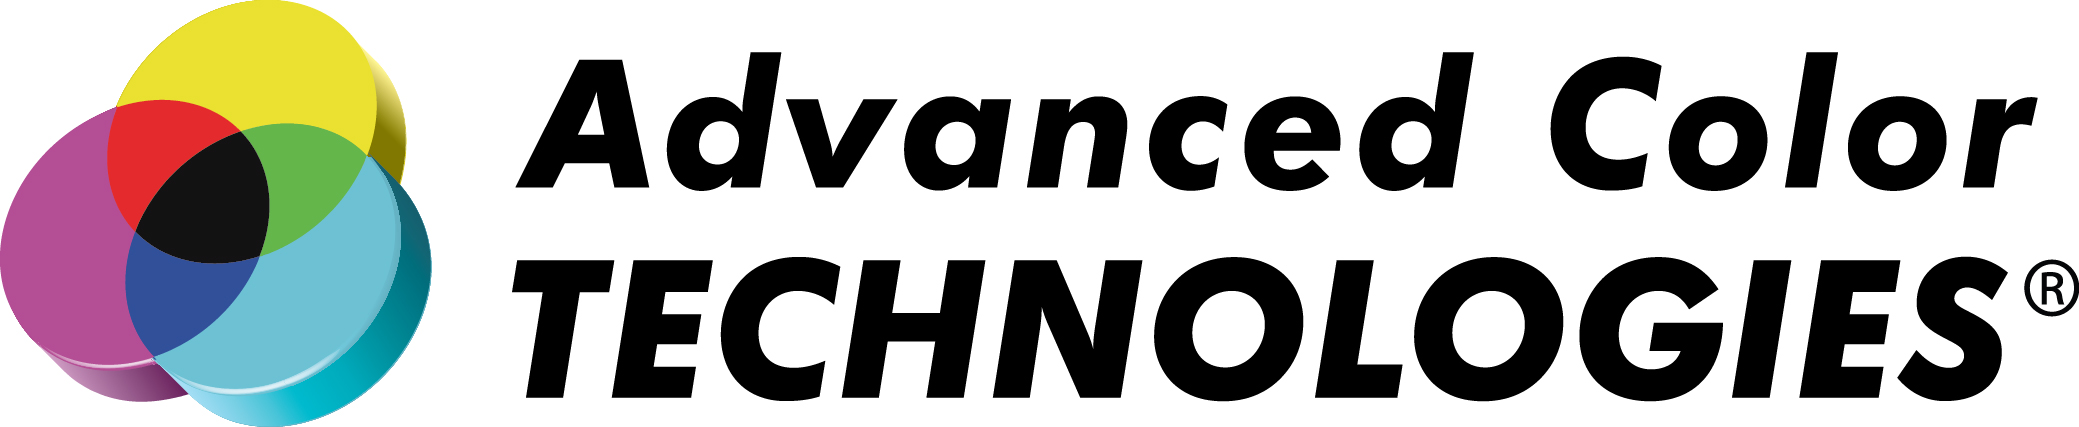 Advanced Color Technology Logo photo - 1